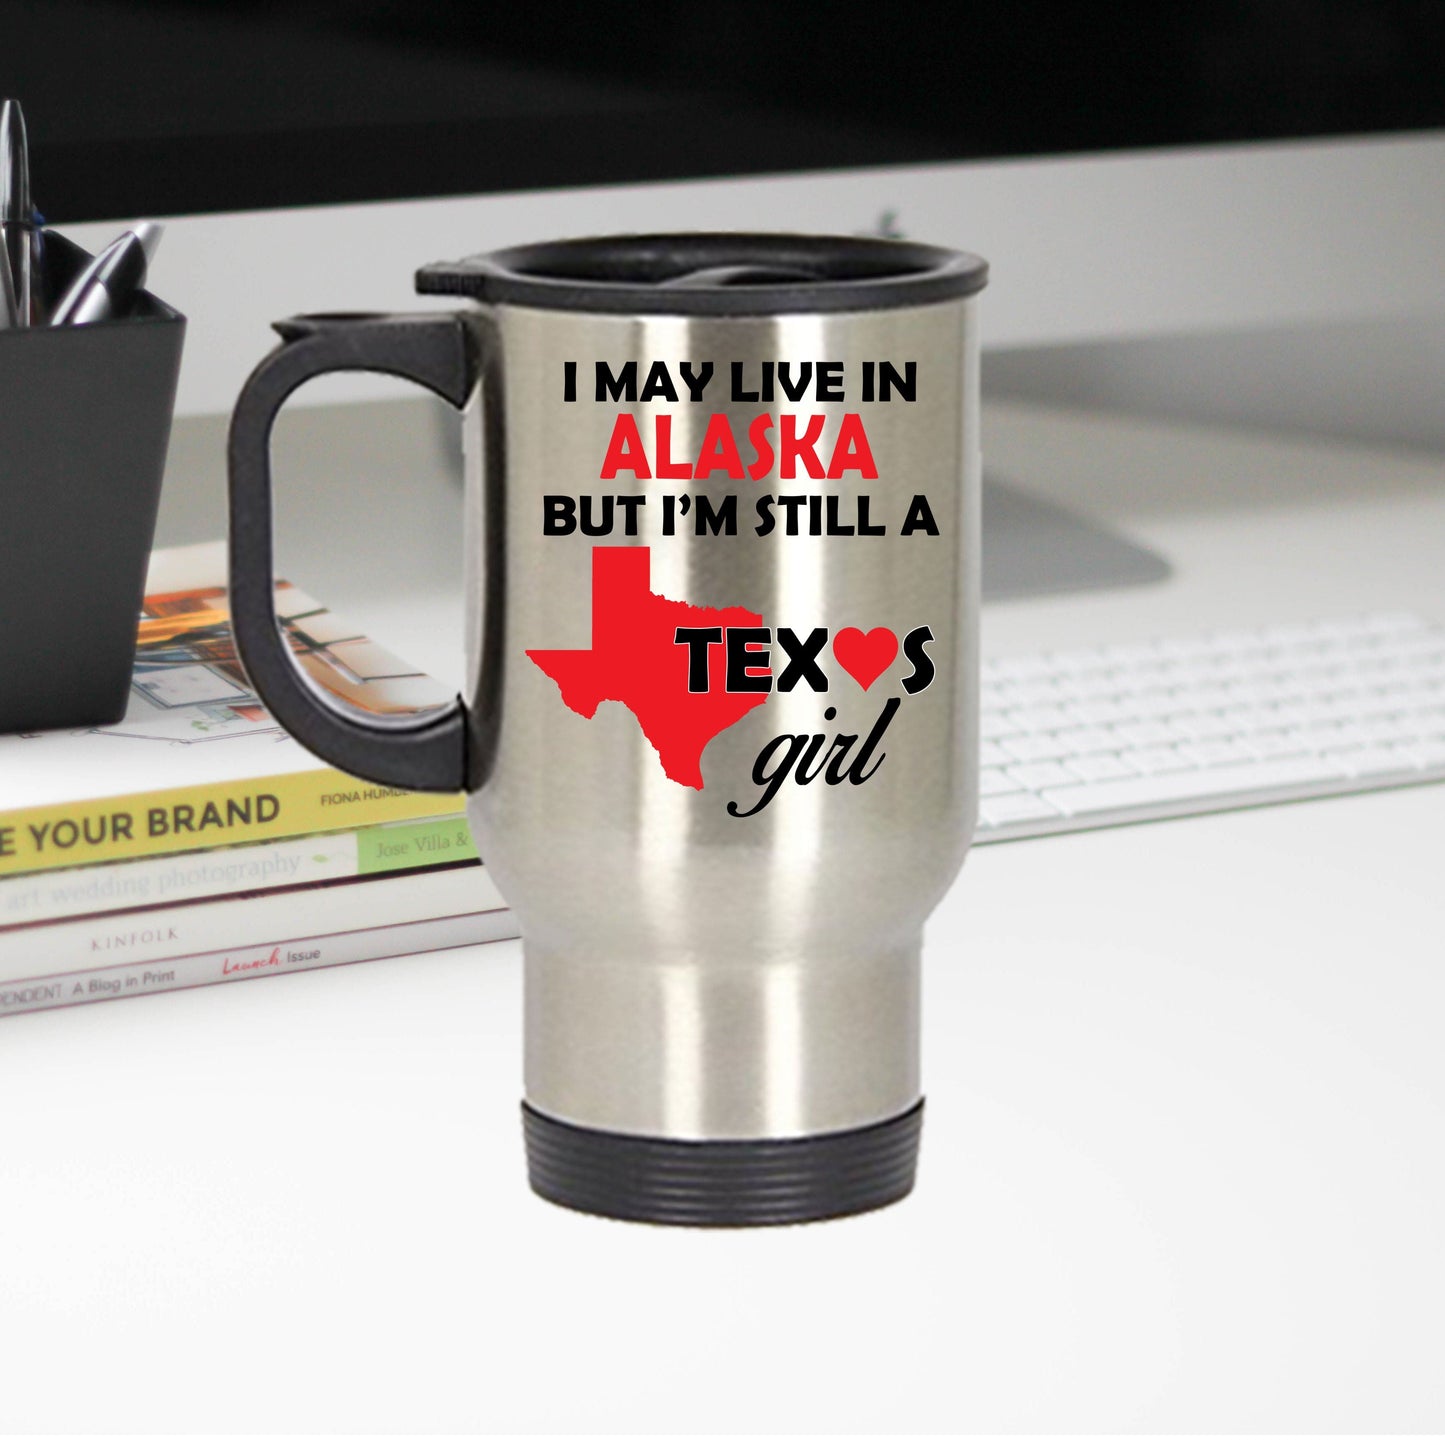 Texas Girl Travel Tumbler Mug - I May Live In Alaska But I'm Still a Texas Girl